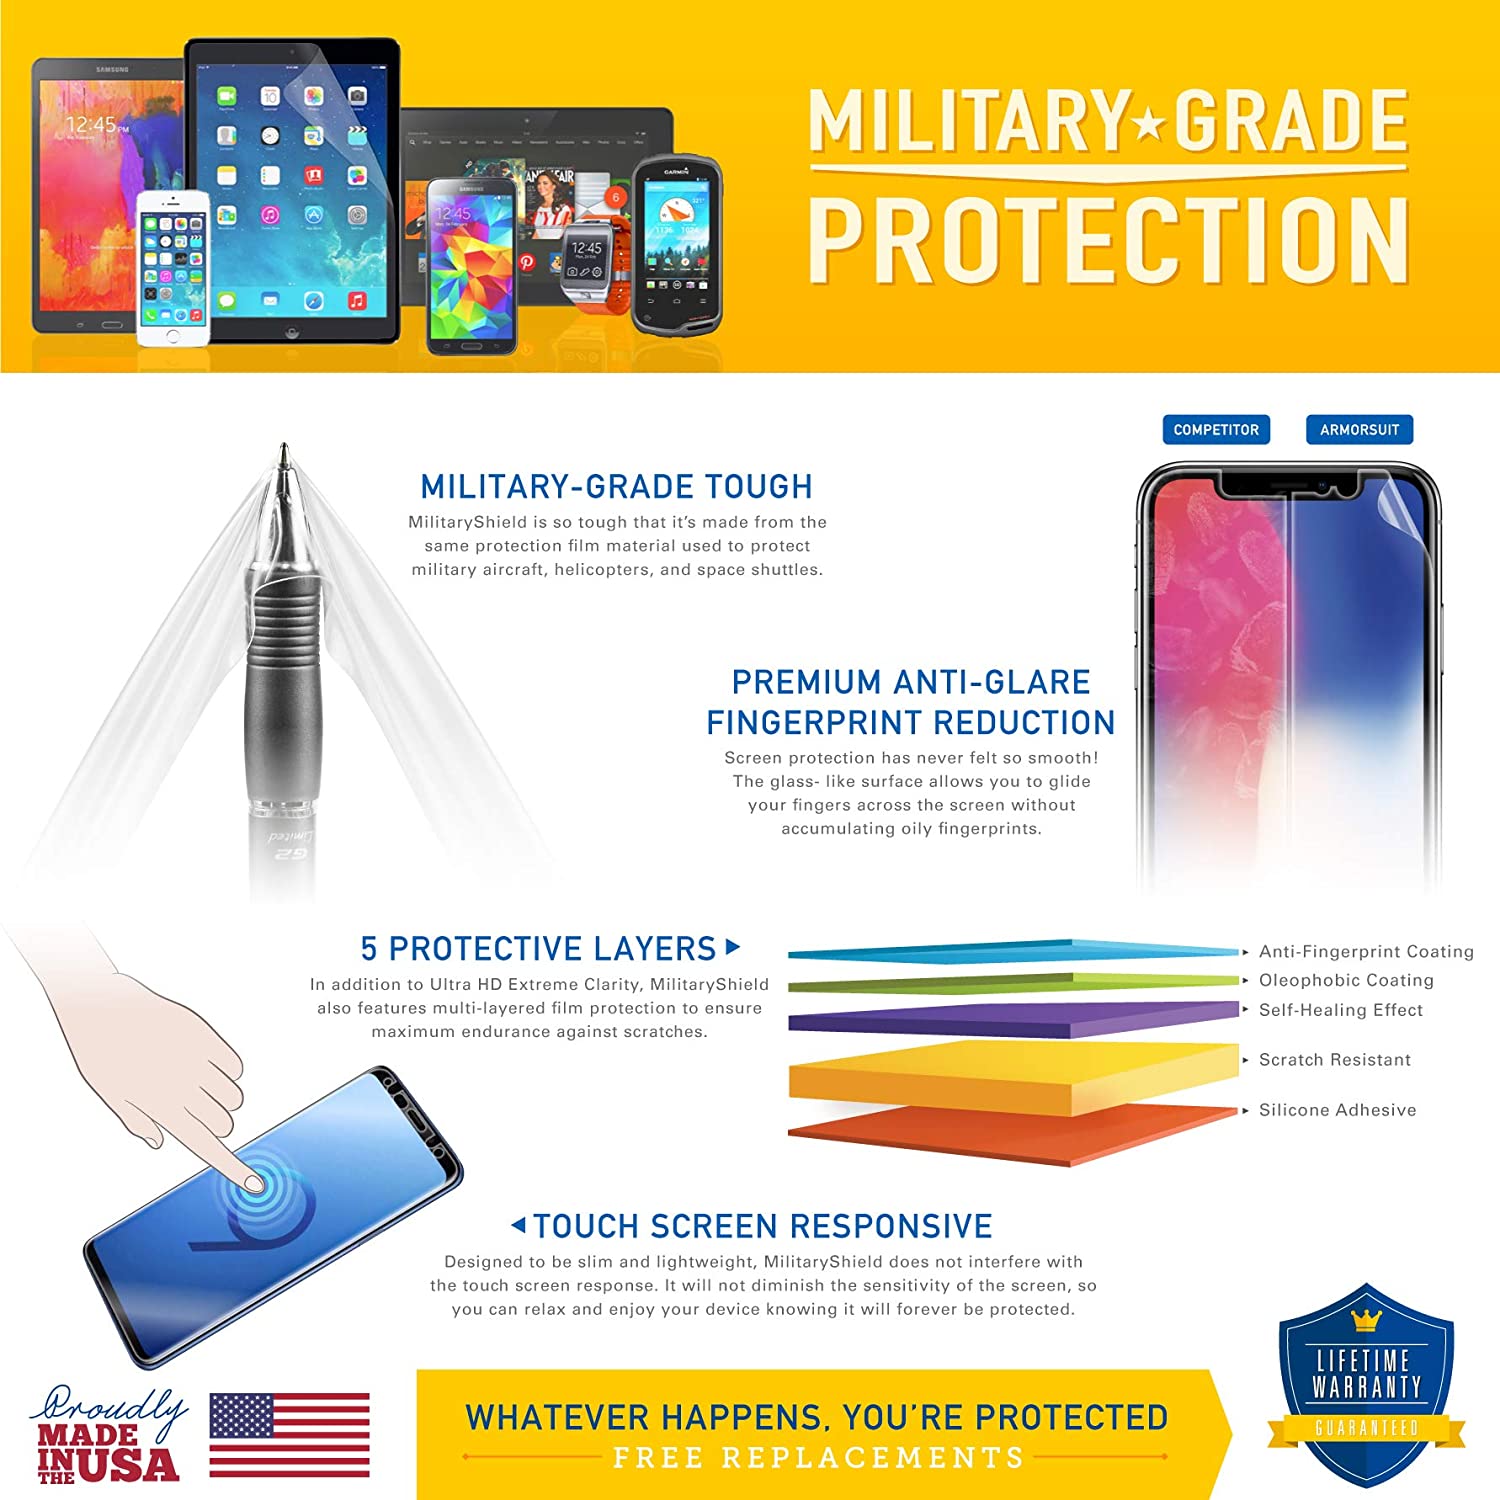 [2 Pack] Motorola Moto Z2 Force Screen Protector